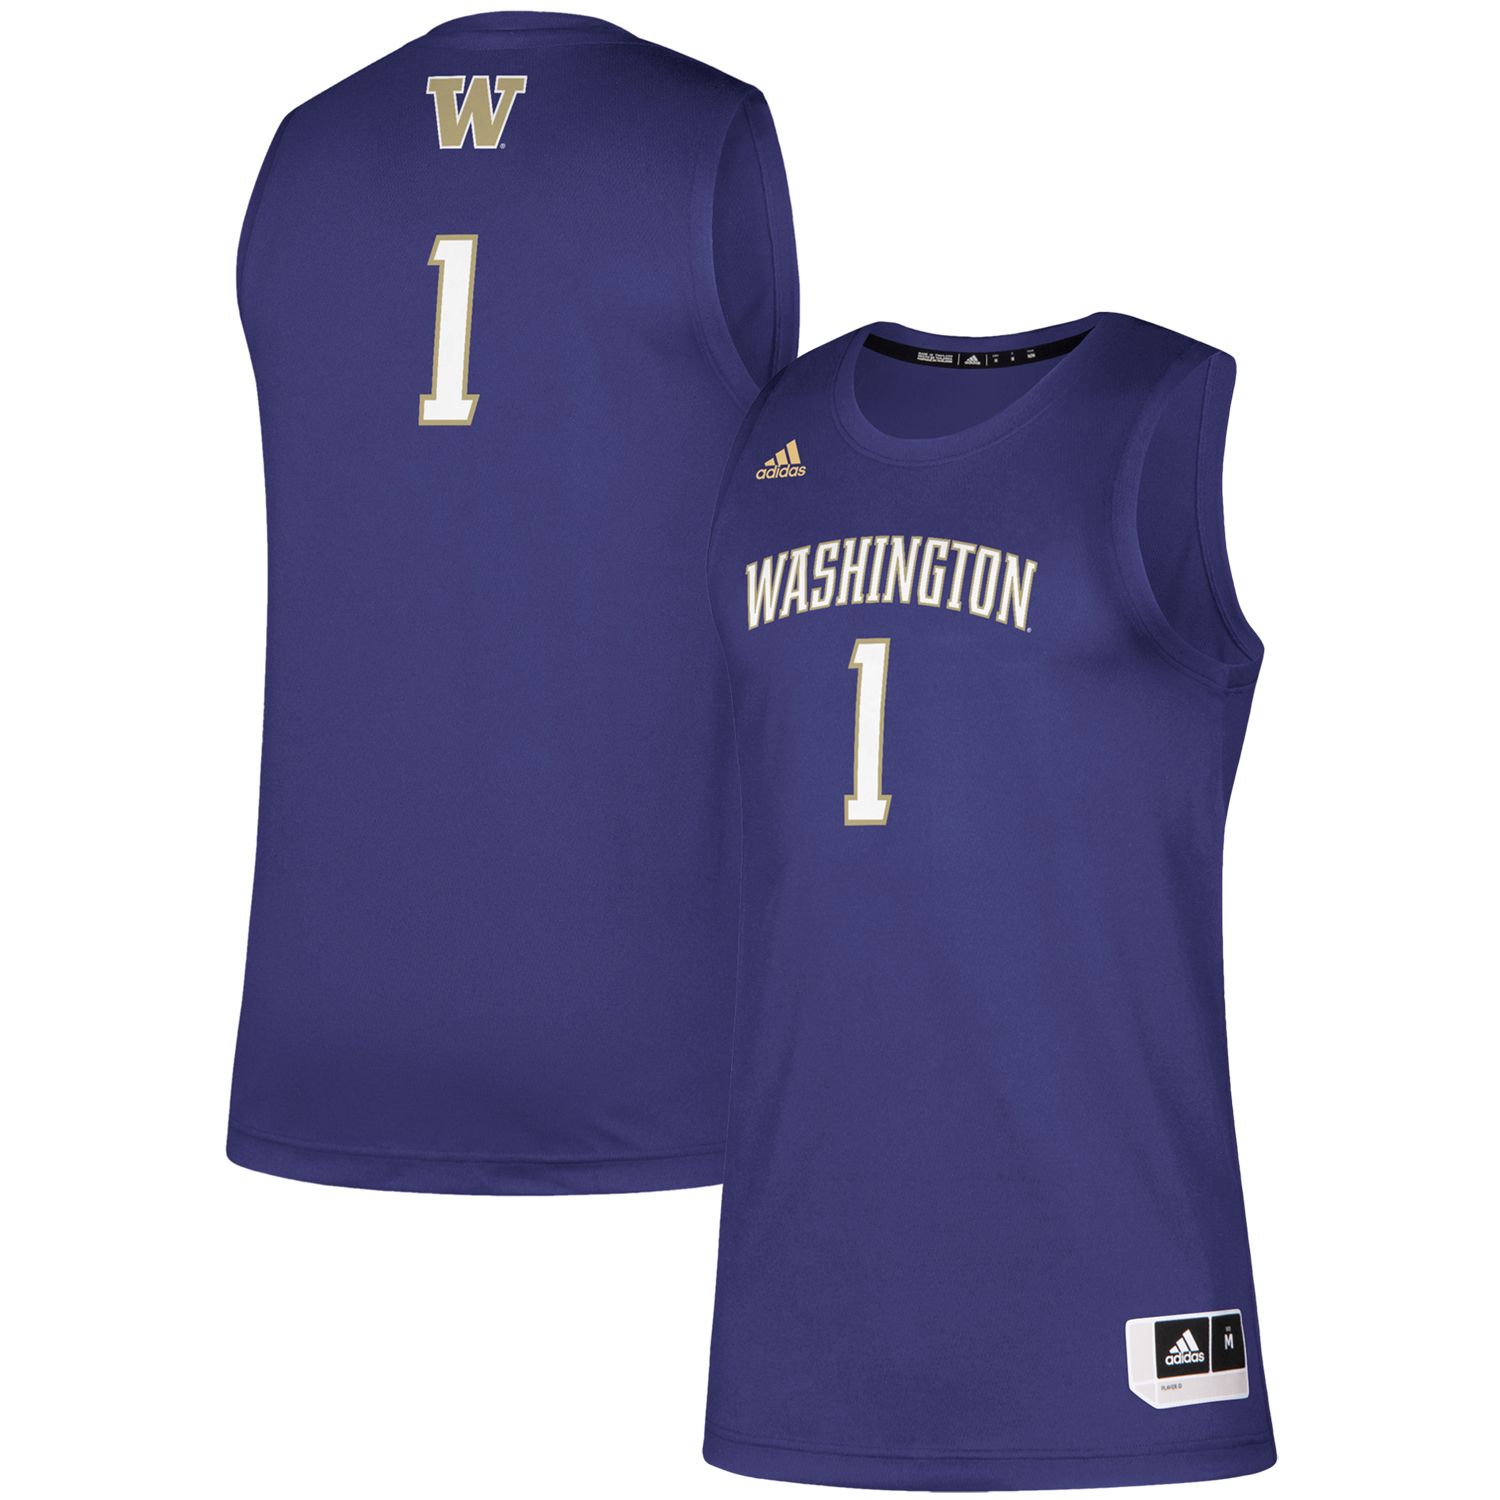 washington huskies basketball jersey